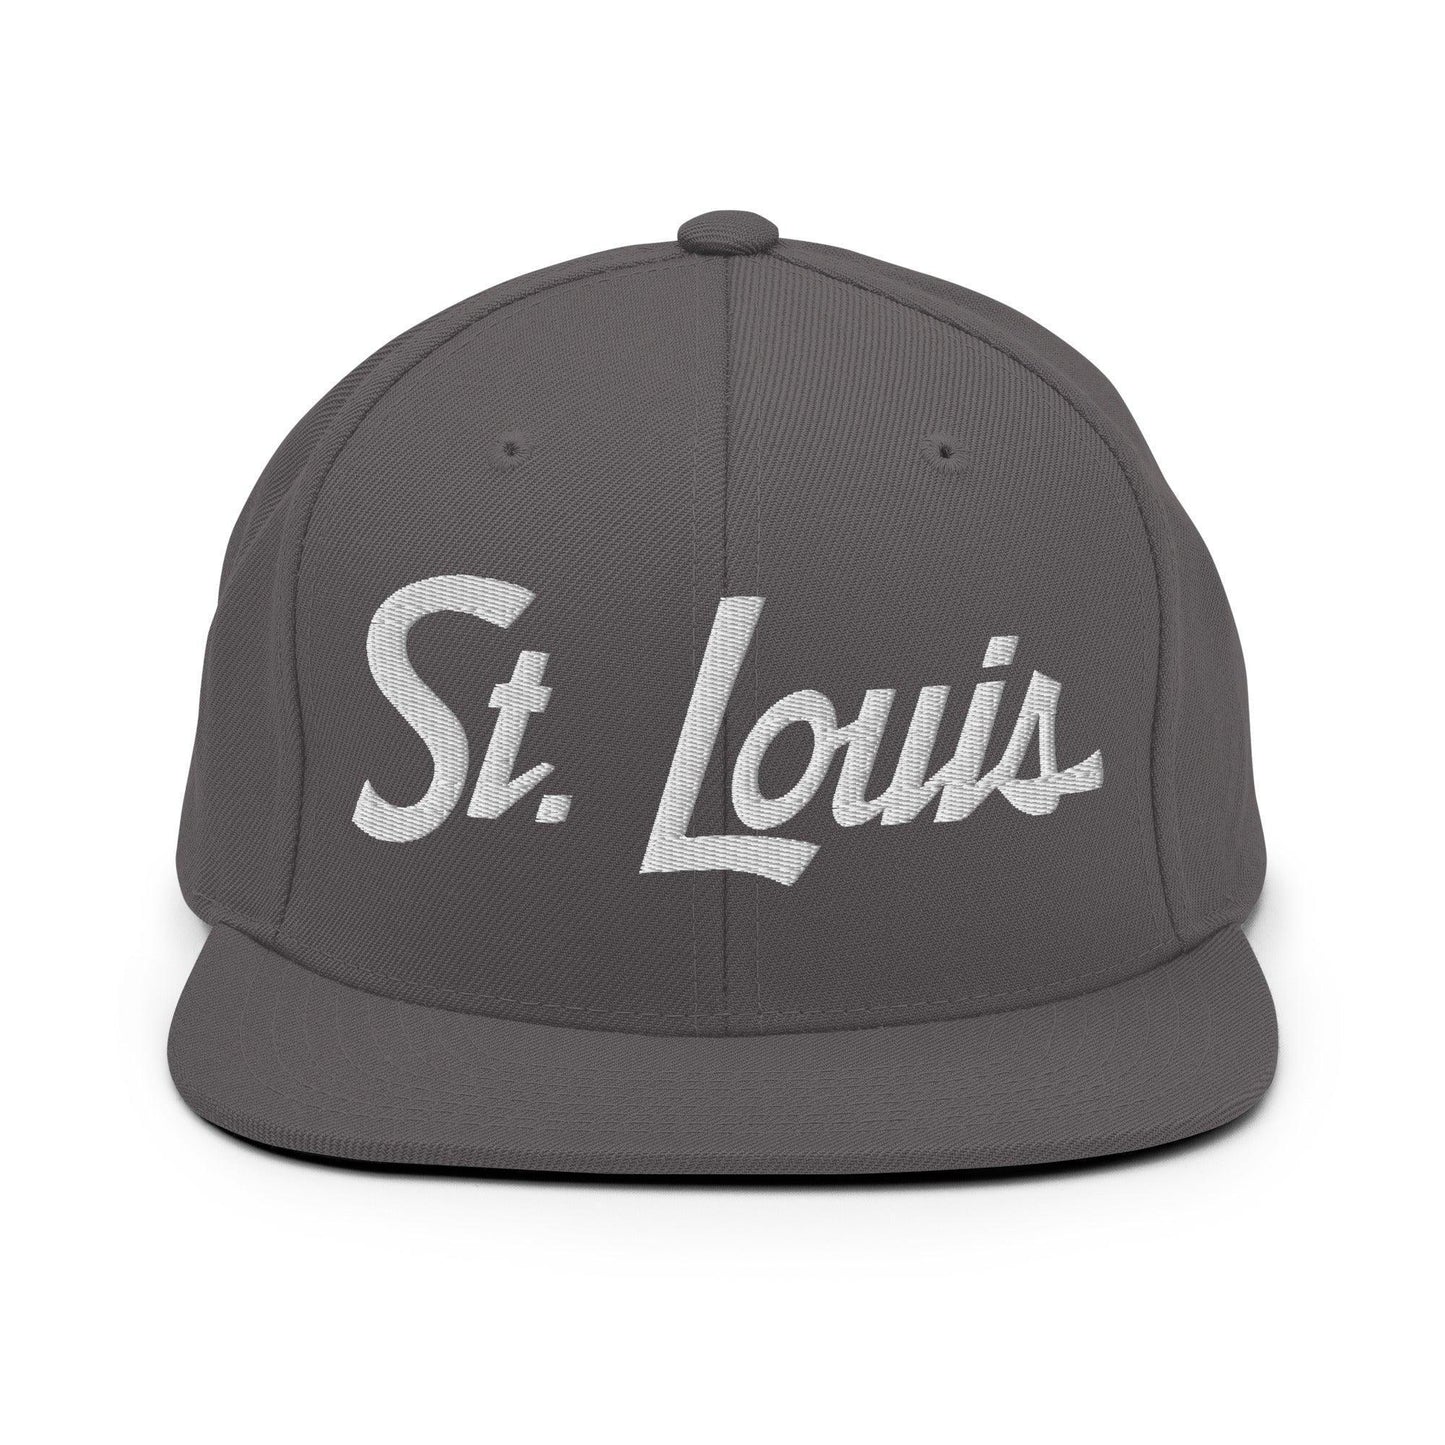 St. Louis Script Snapback Hat Dark Grey